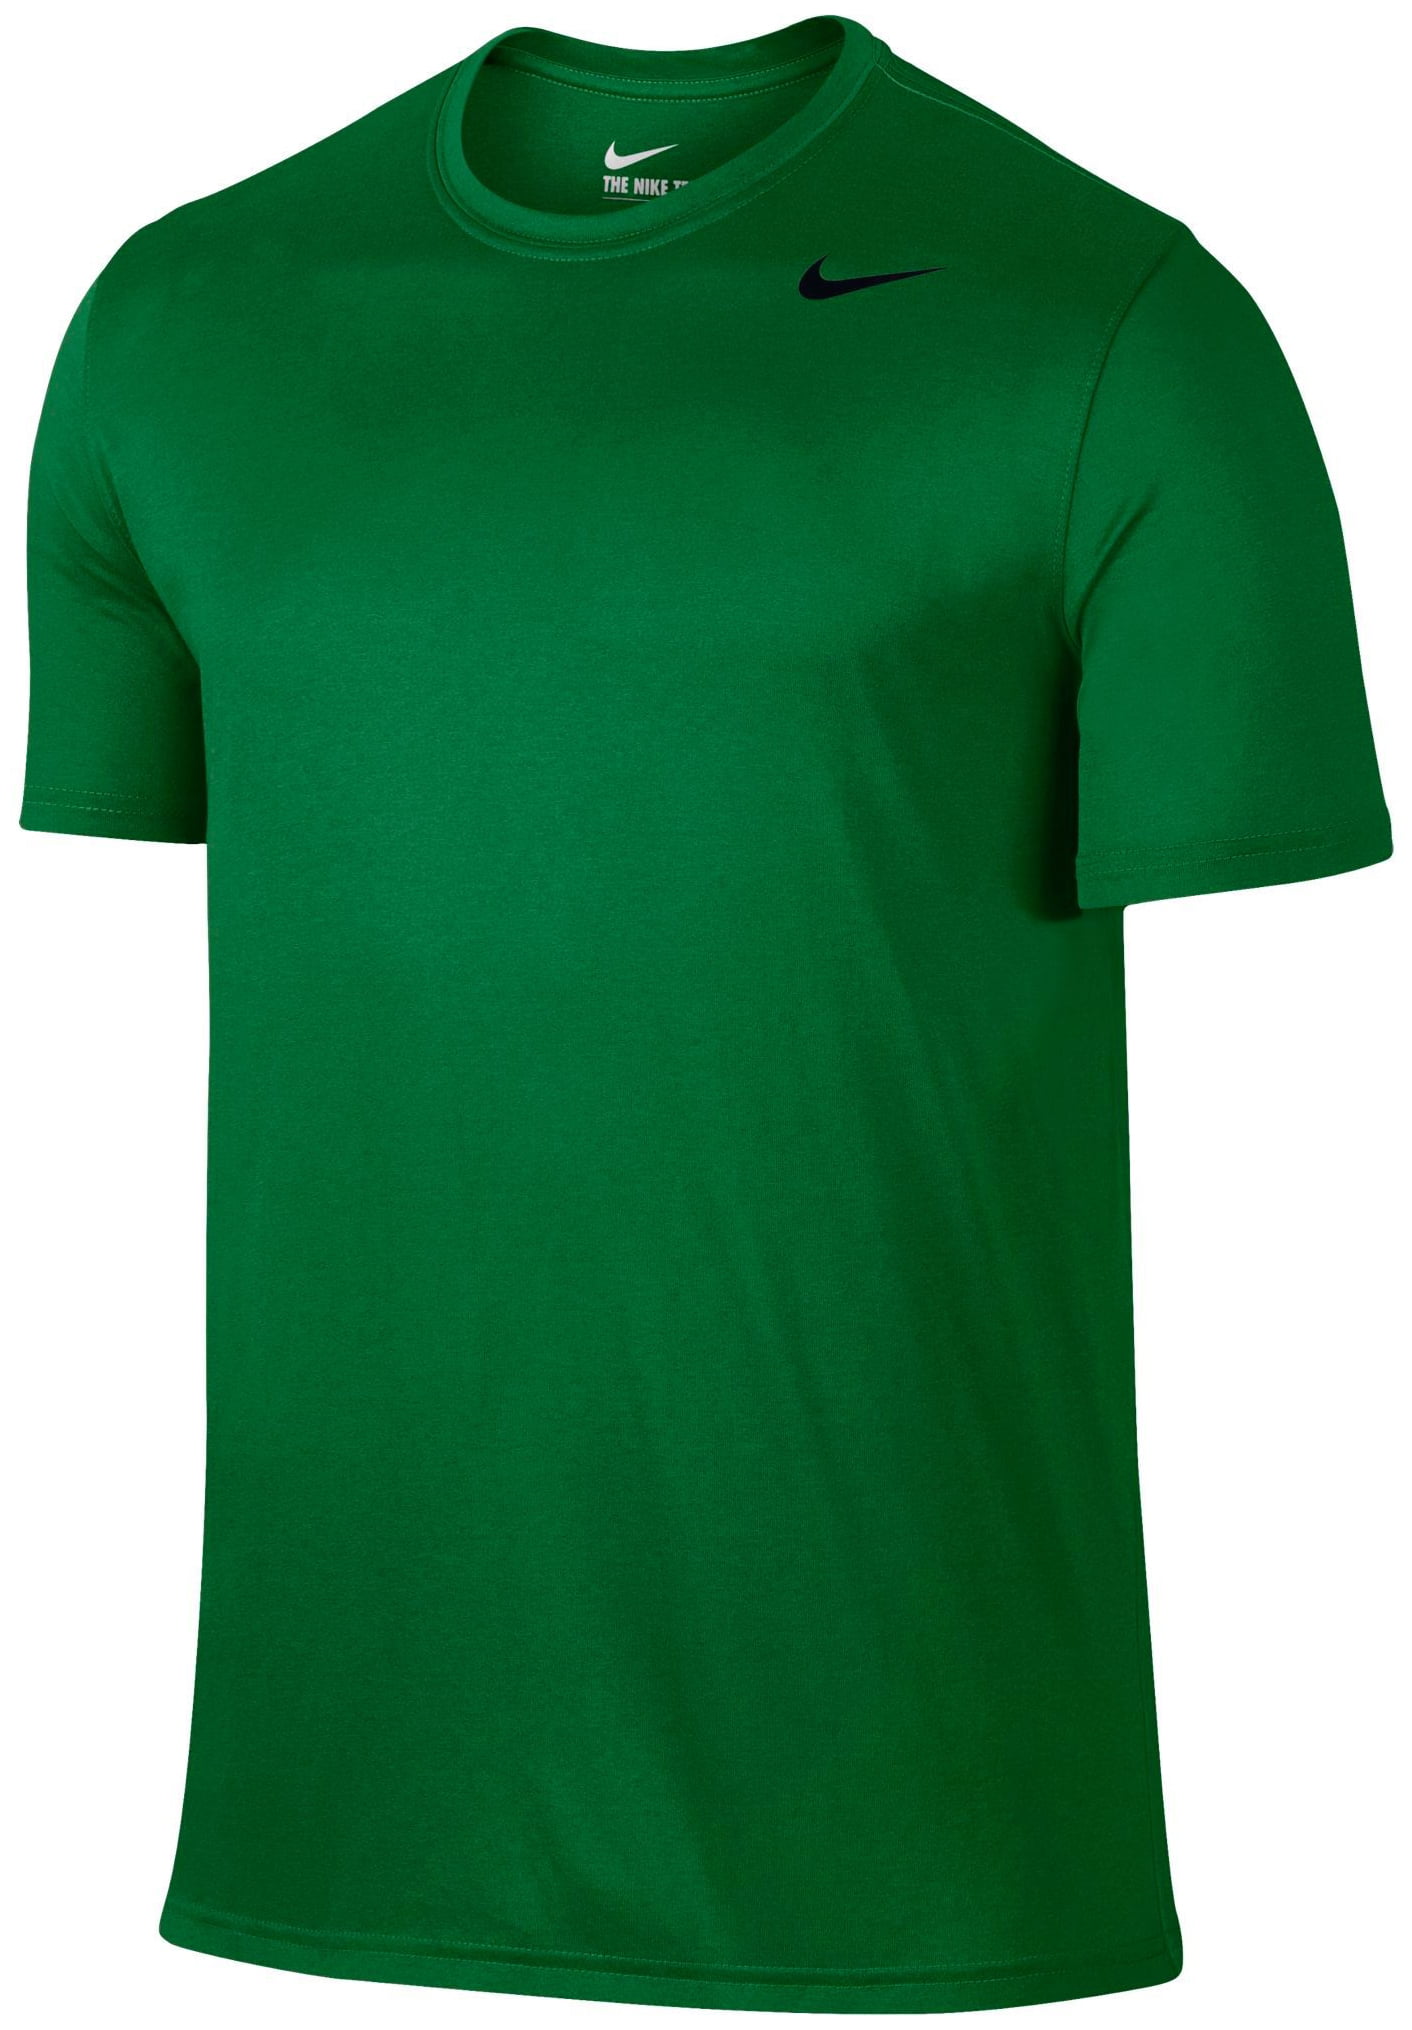 Nike - Nike Men's Legend 2.0 T-Shirt - Pine Green/Blk - Size L ...